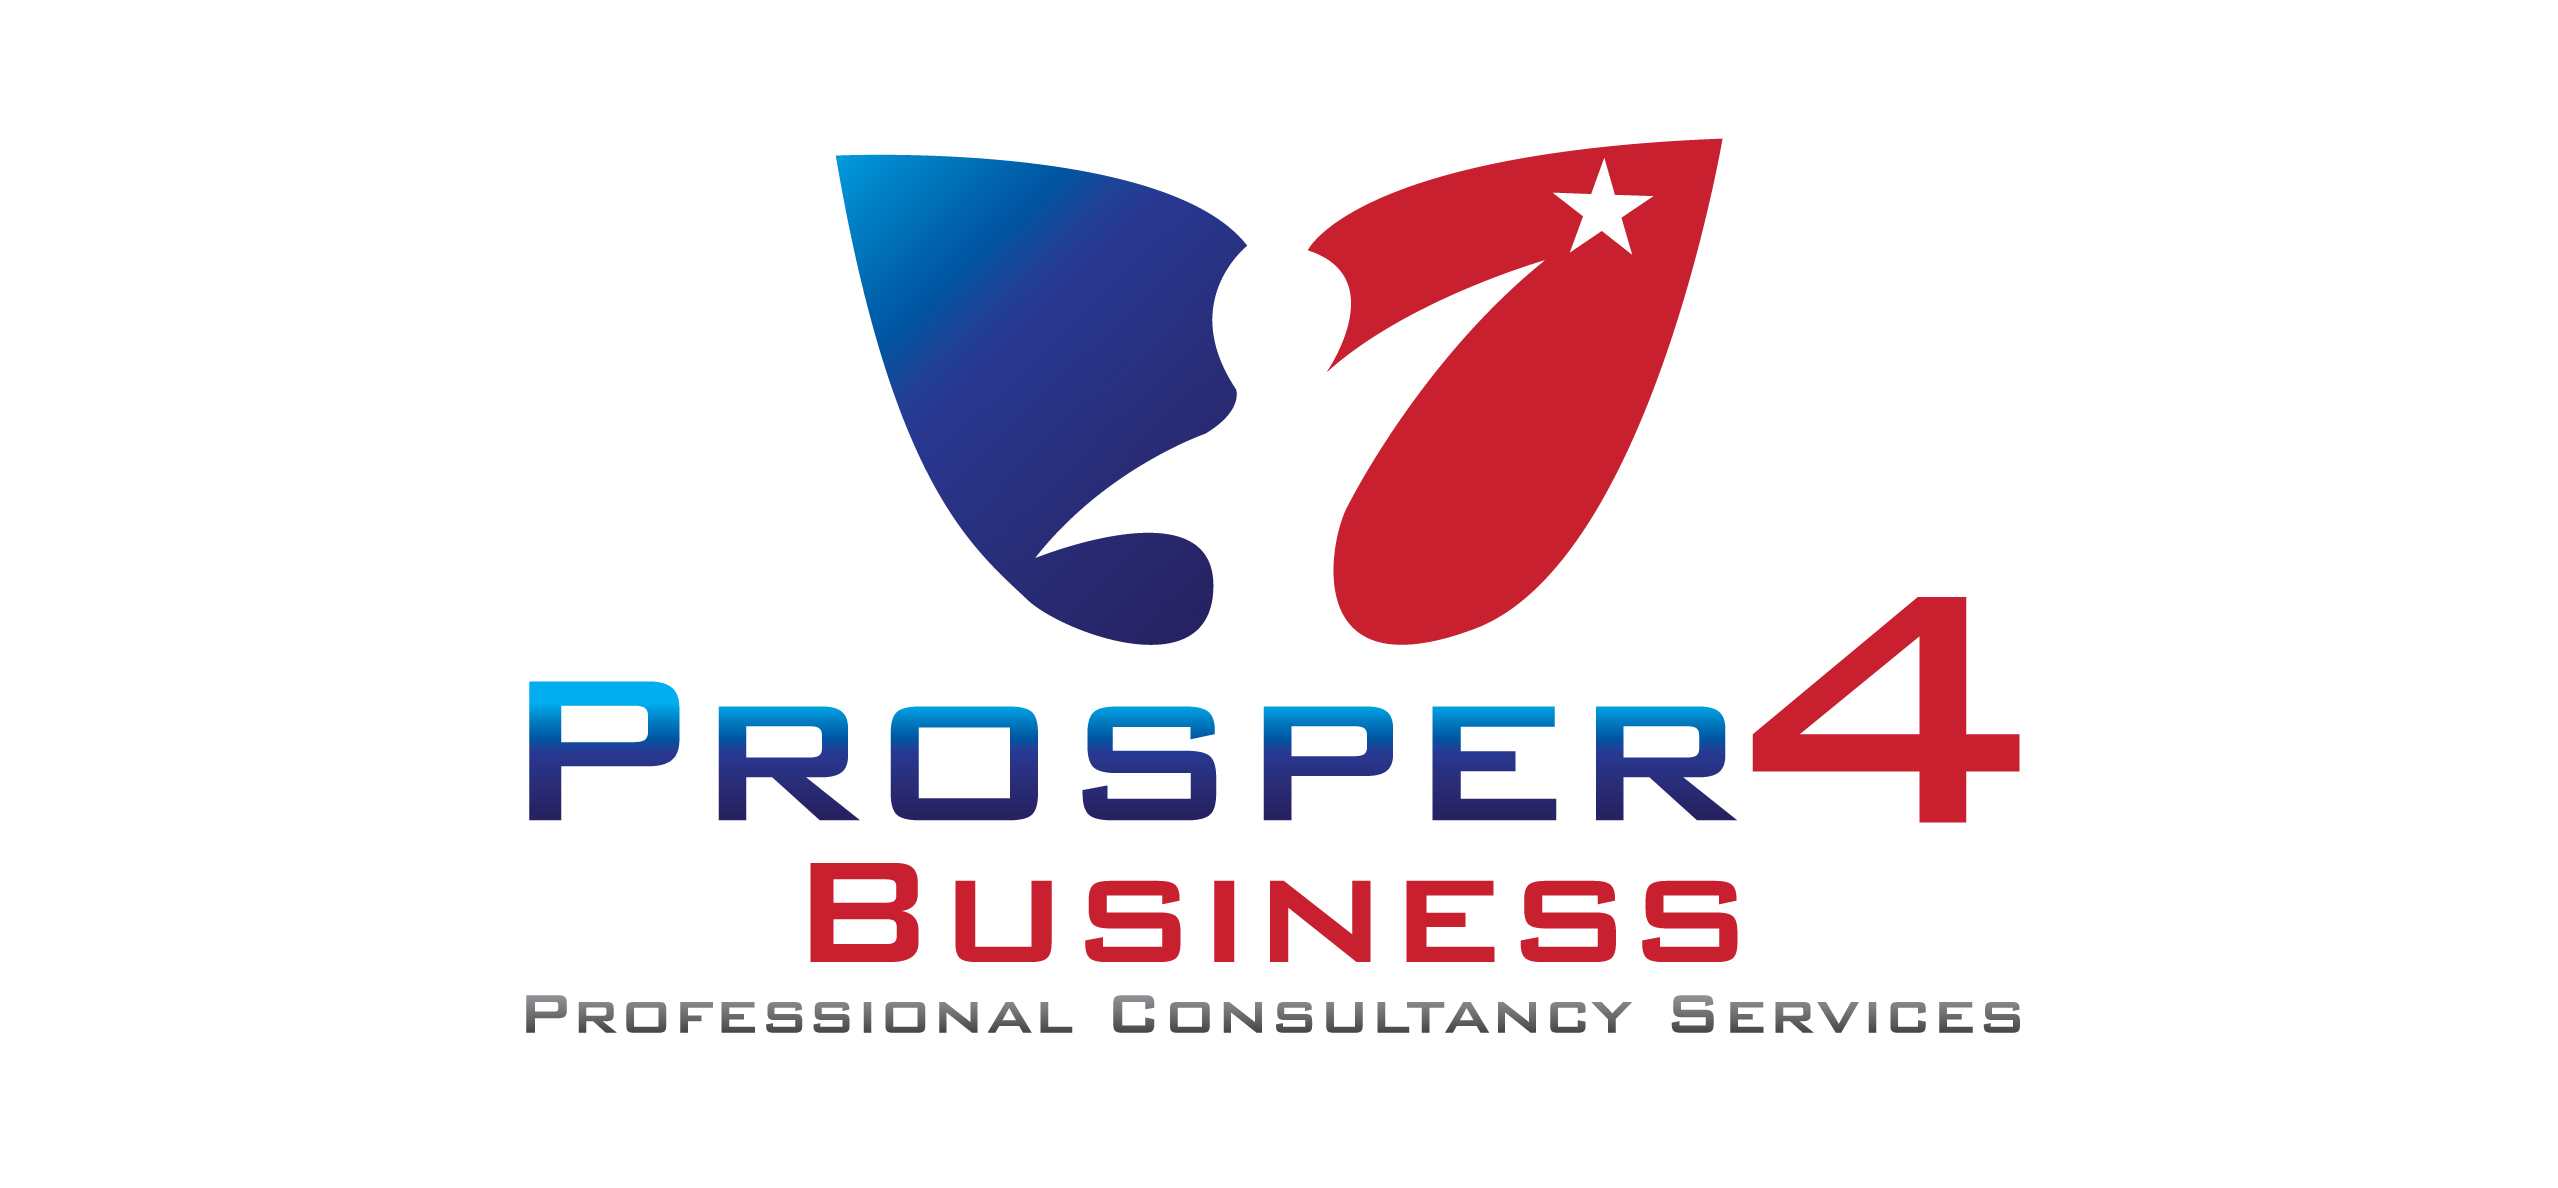 Prosper 4 Business CIC